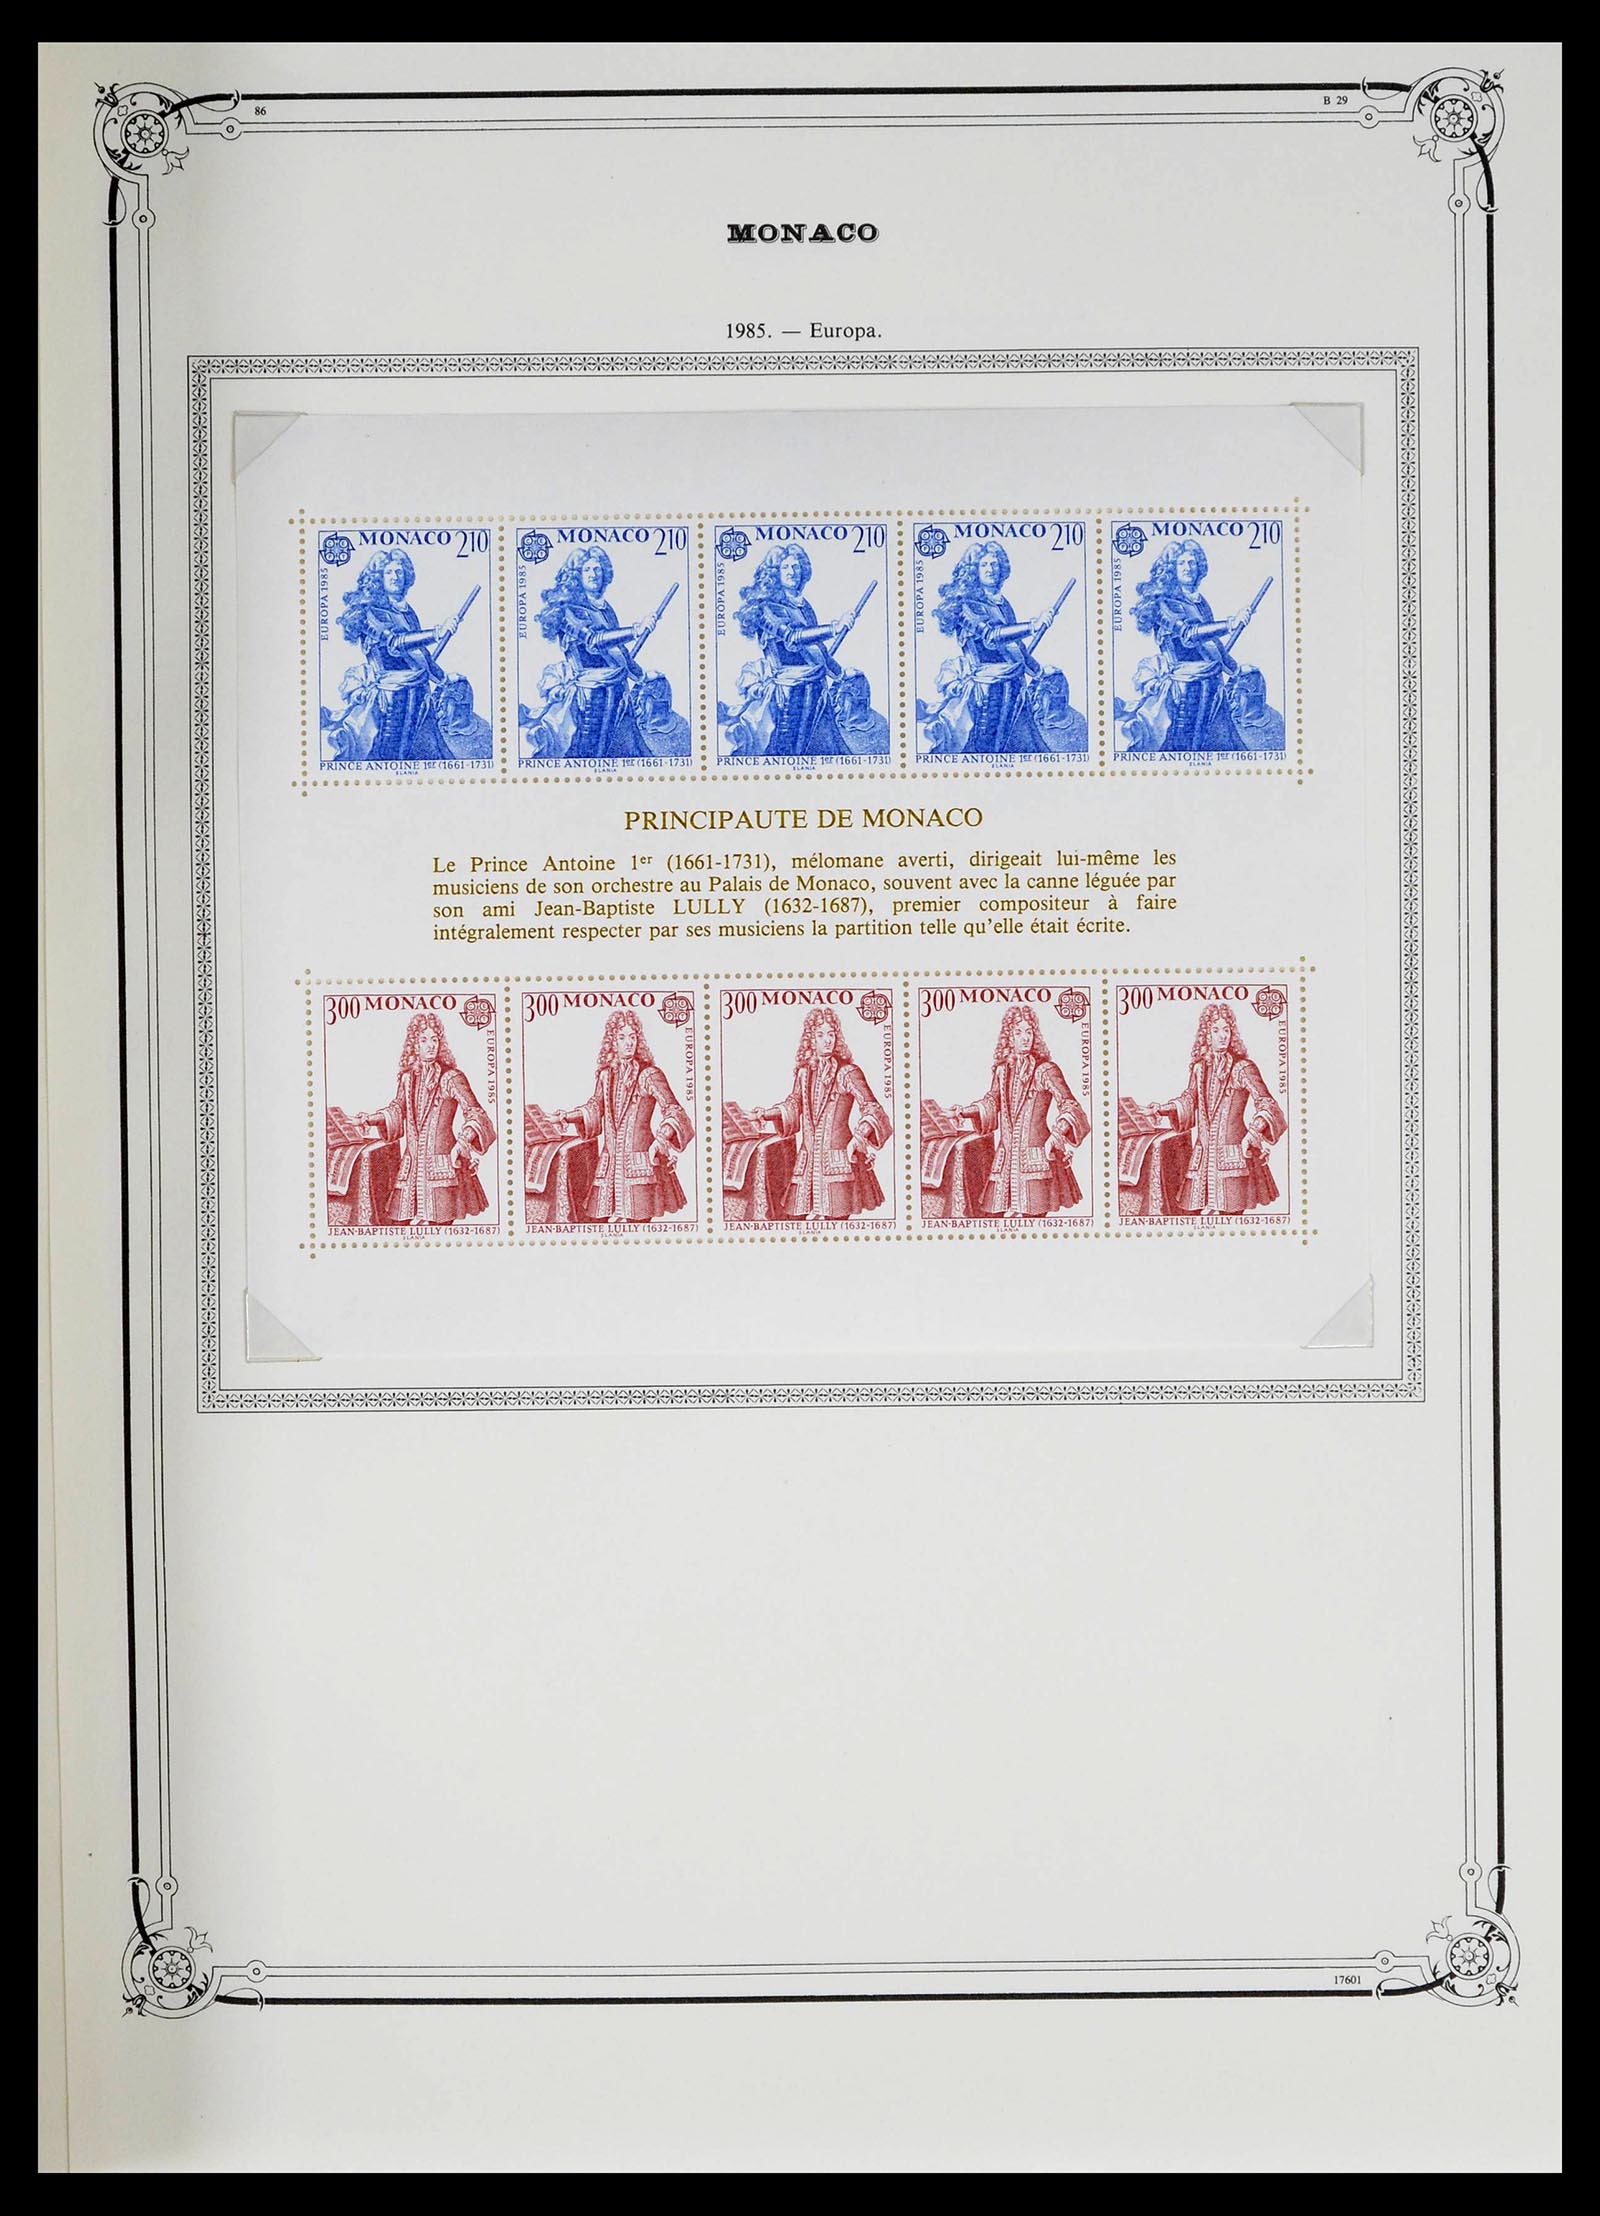 39133 0220 - Stamp collection 39133 Monaco 1885-1996.